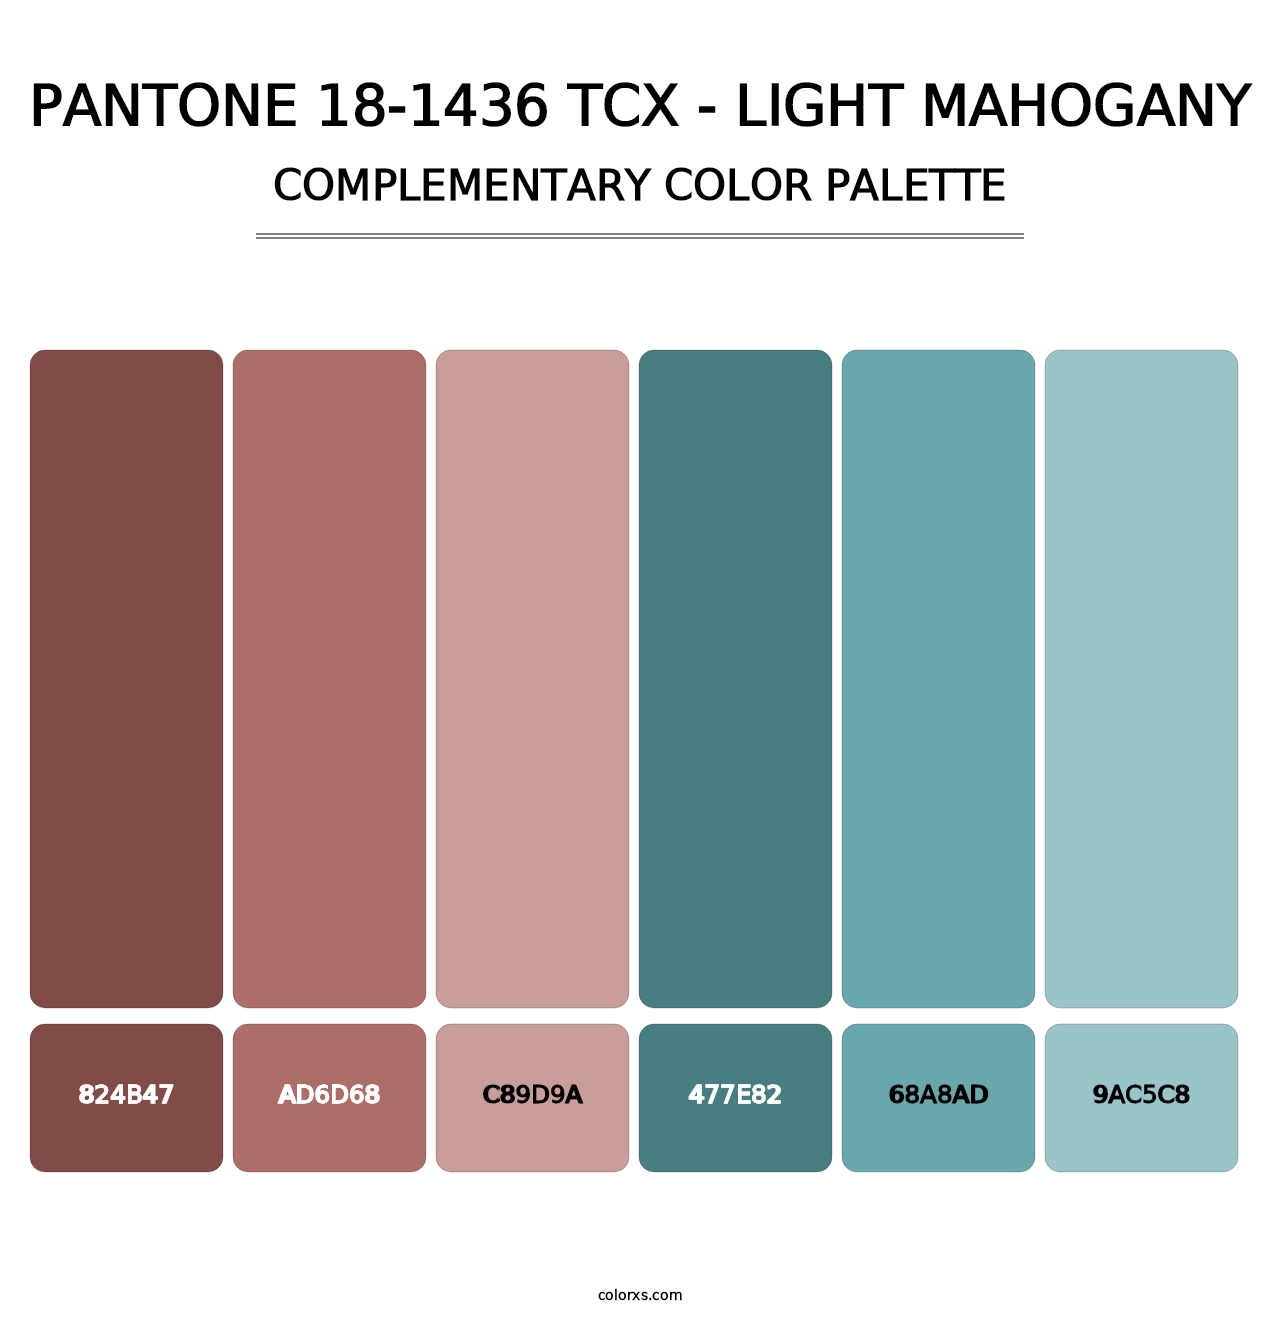 PANTONE 18-1436 TCX - Light Mahogany - Complementary Color Palette